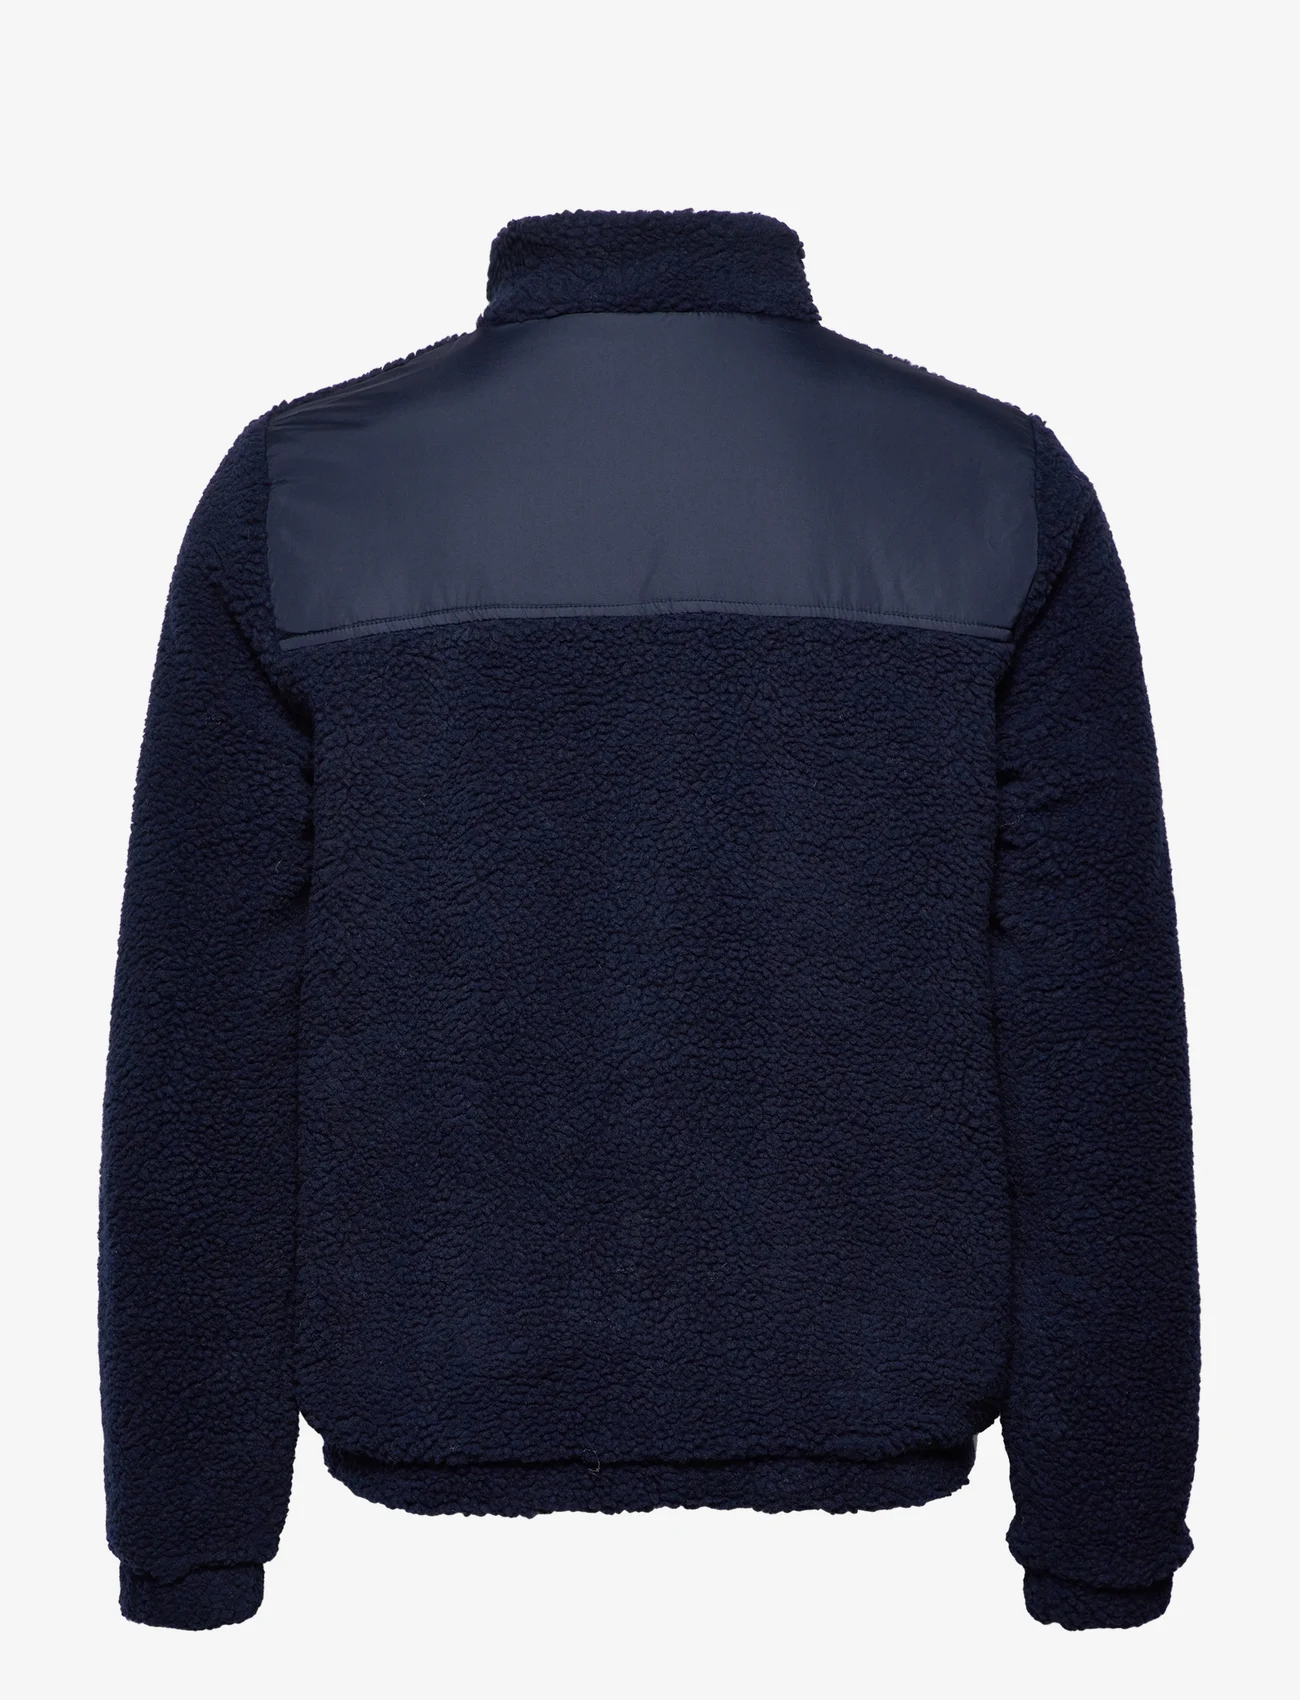 Blend - Sweatshirt - mid layer jackets - dress blues - 1